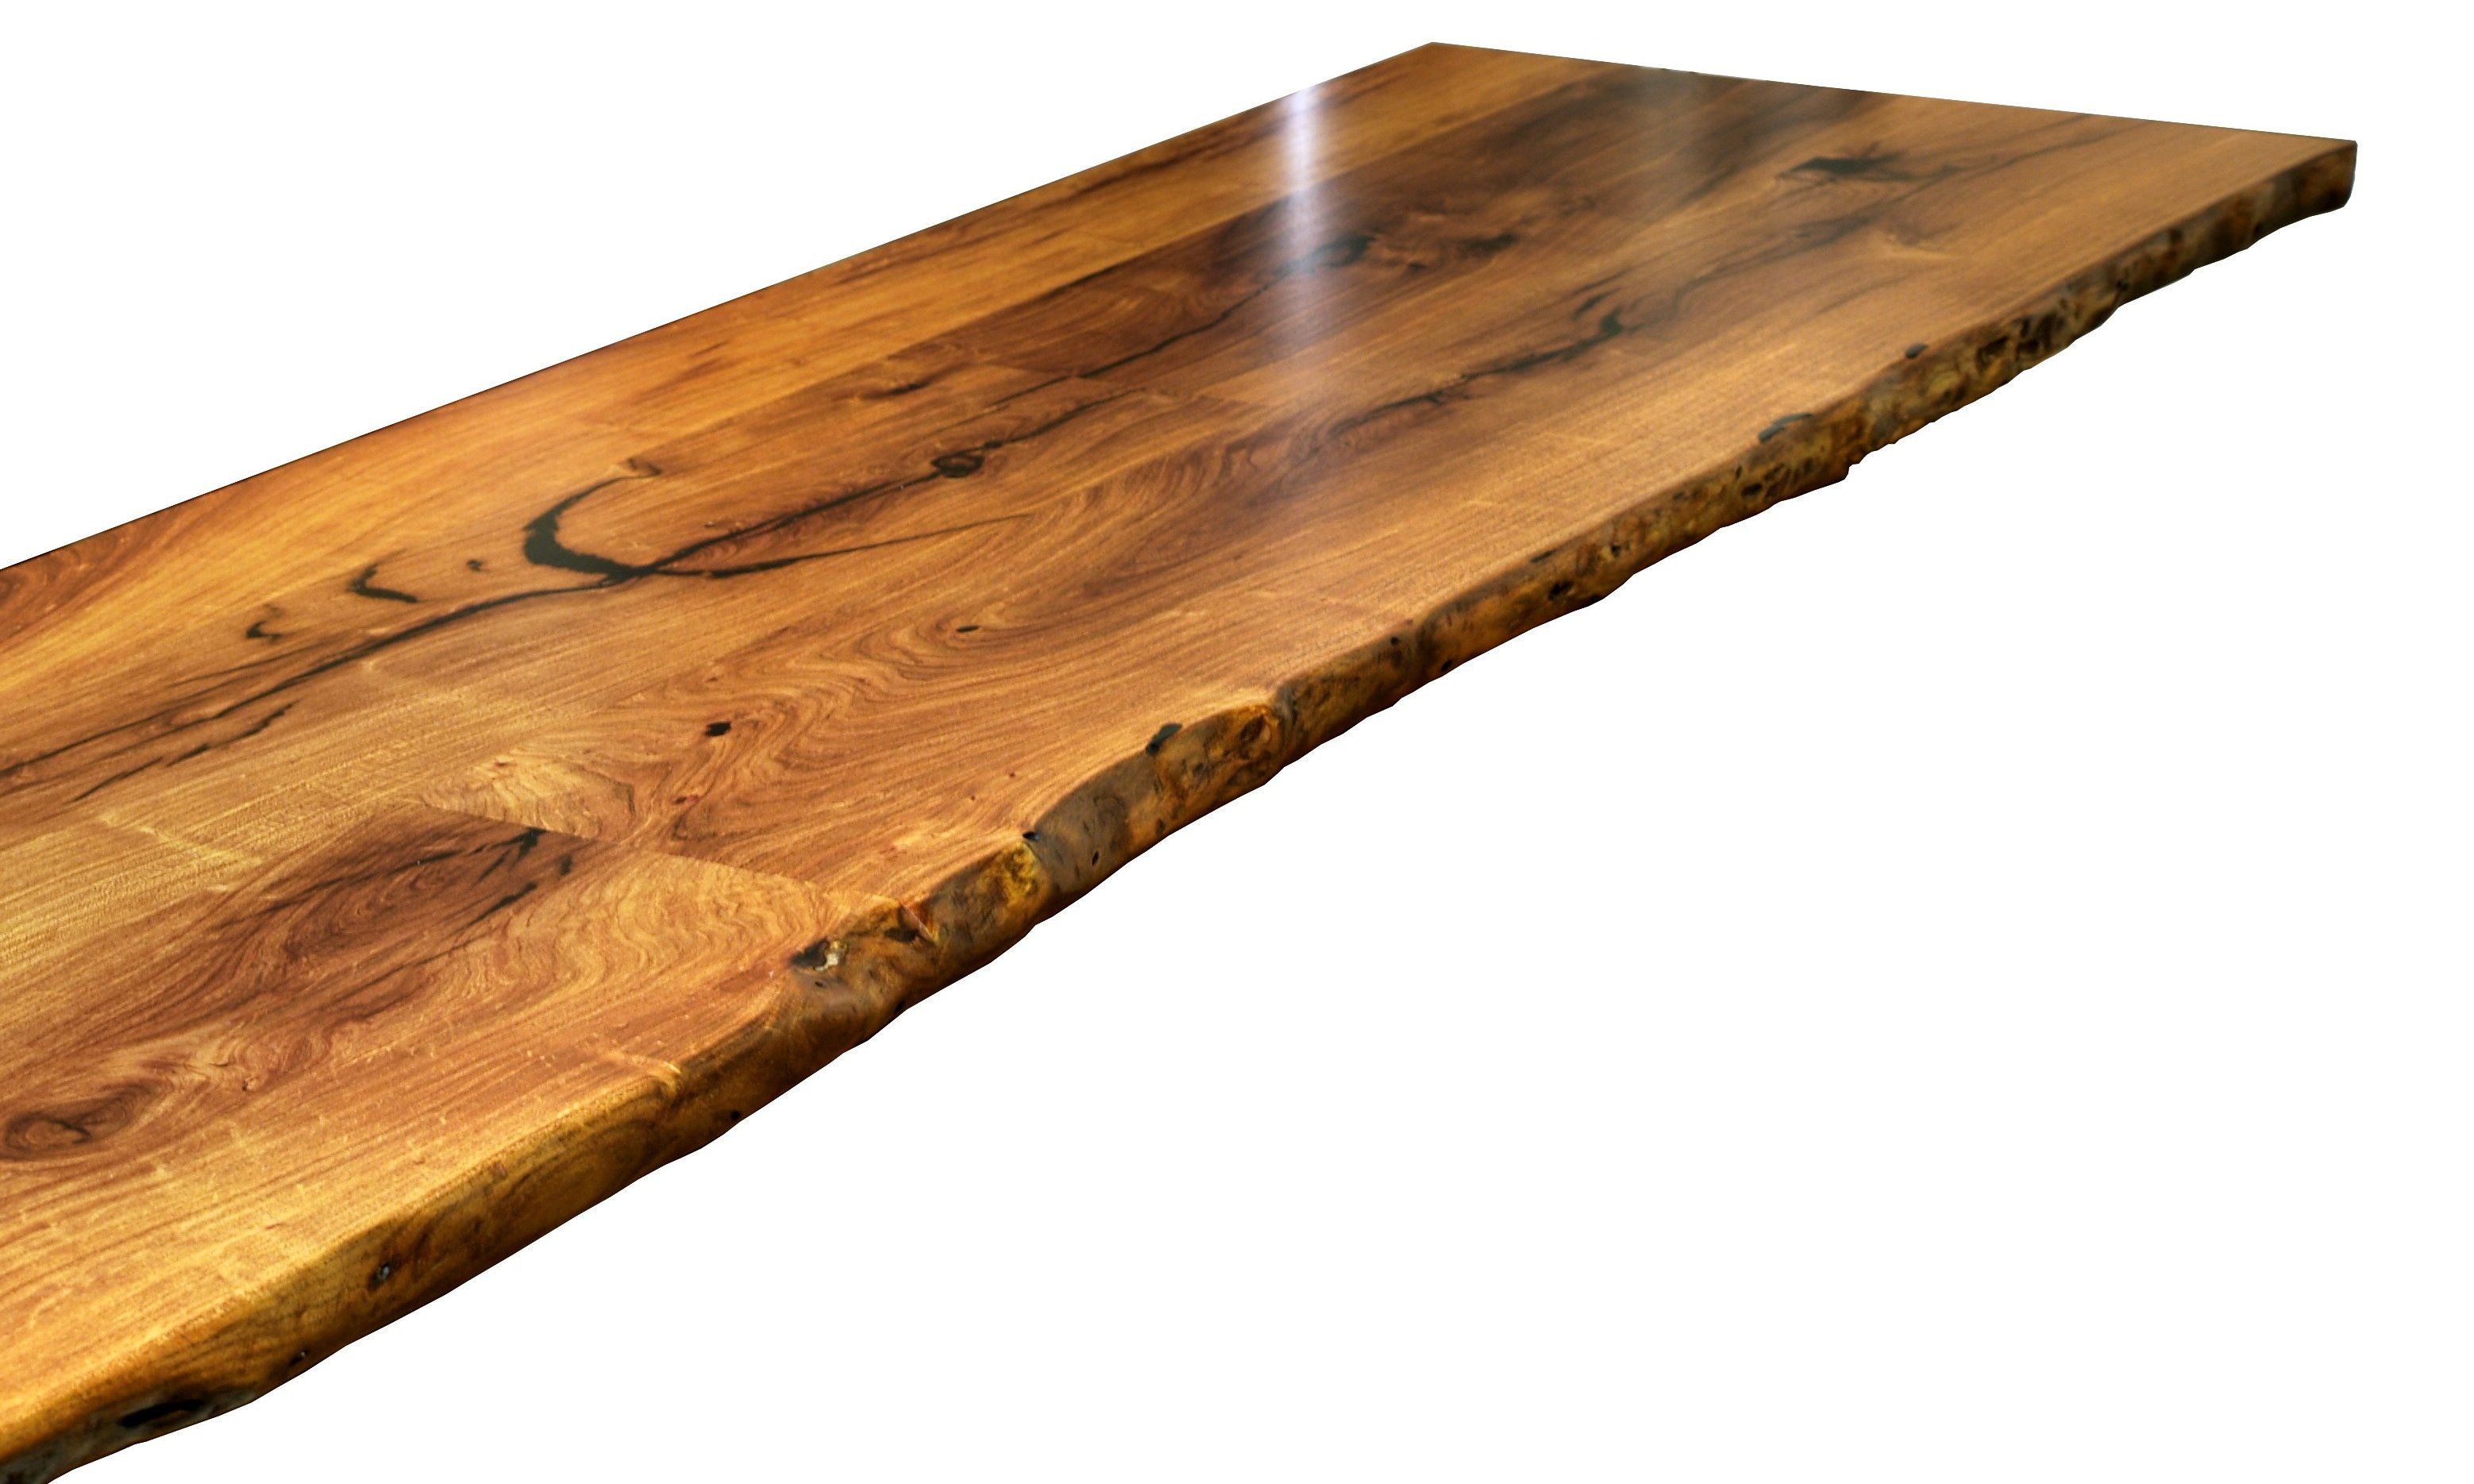 Wane Edges On Custom Wood Countertops, How To Make Live Edge Wood Countertops